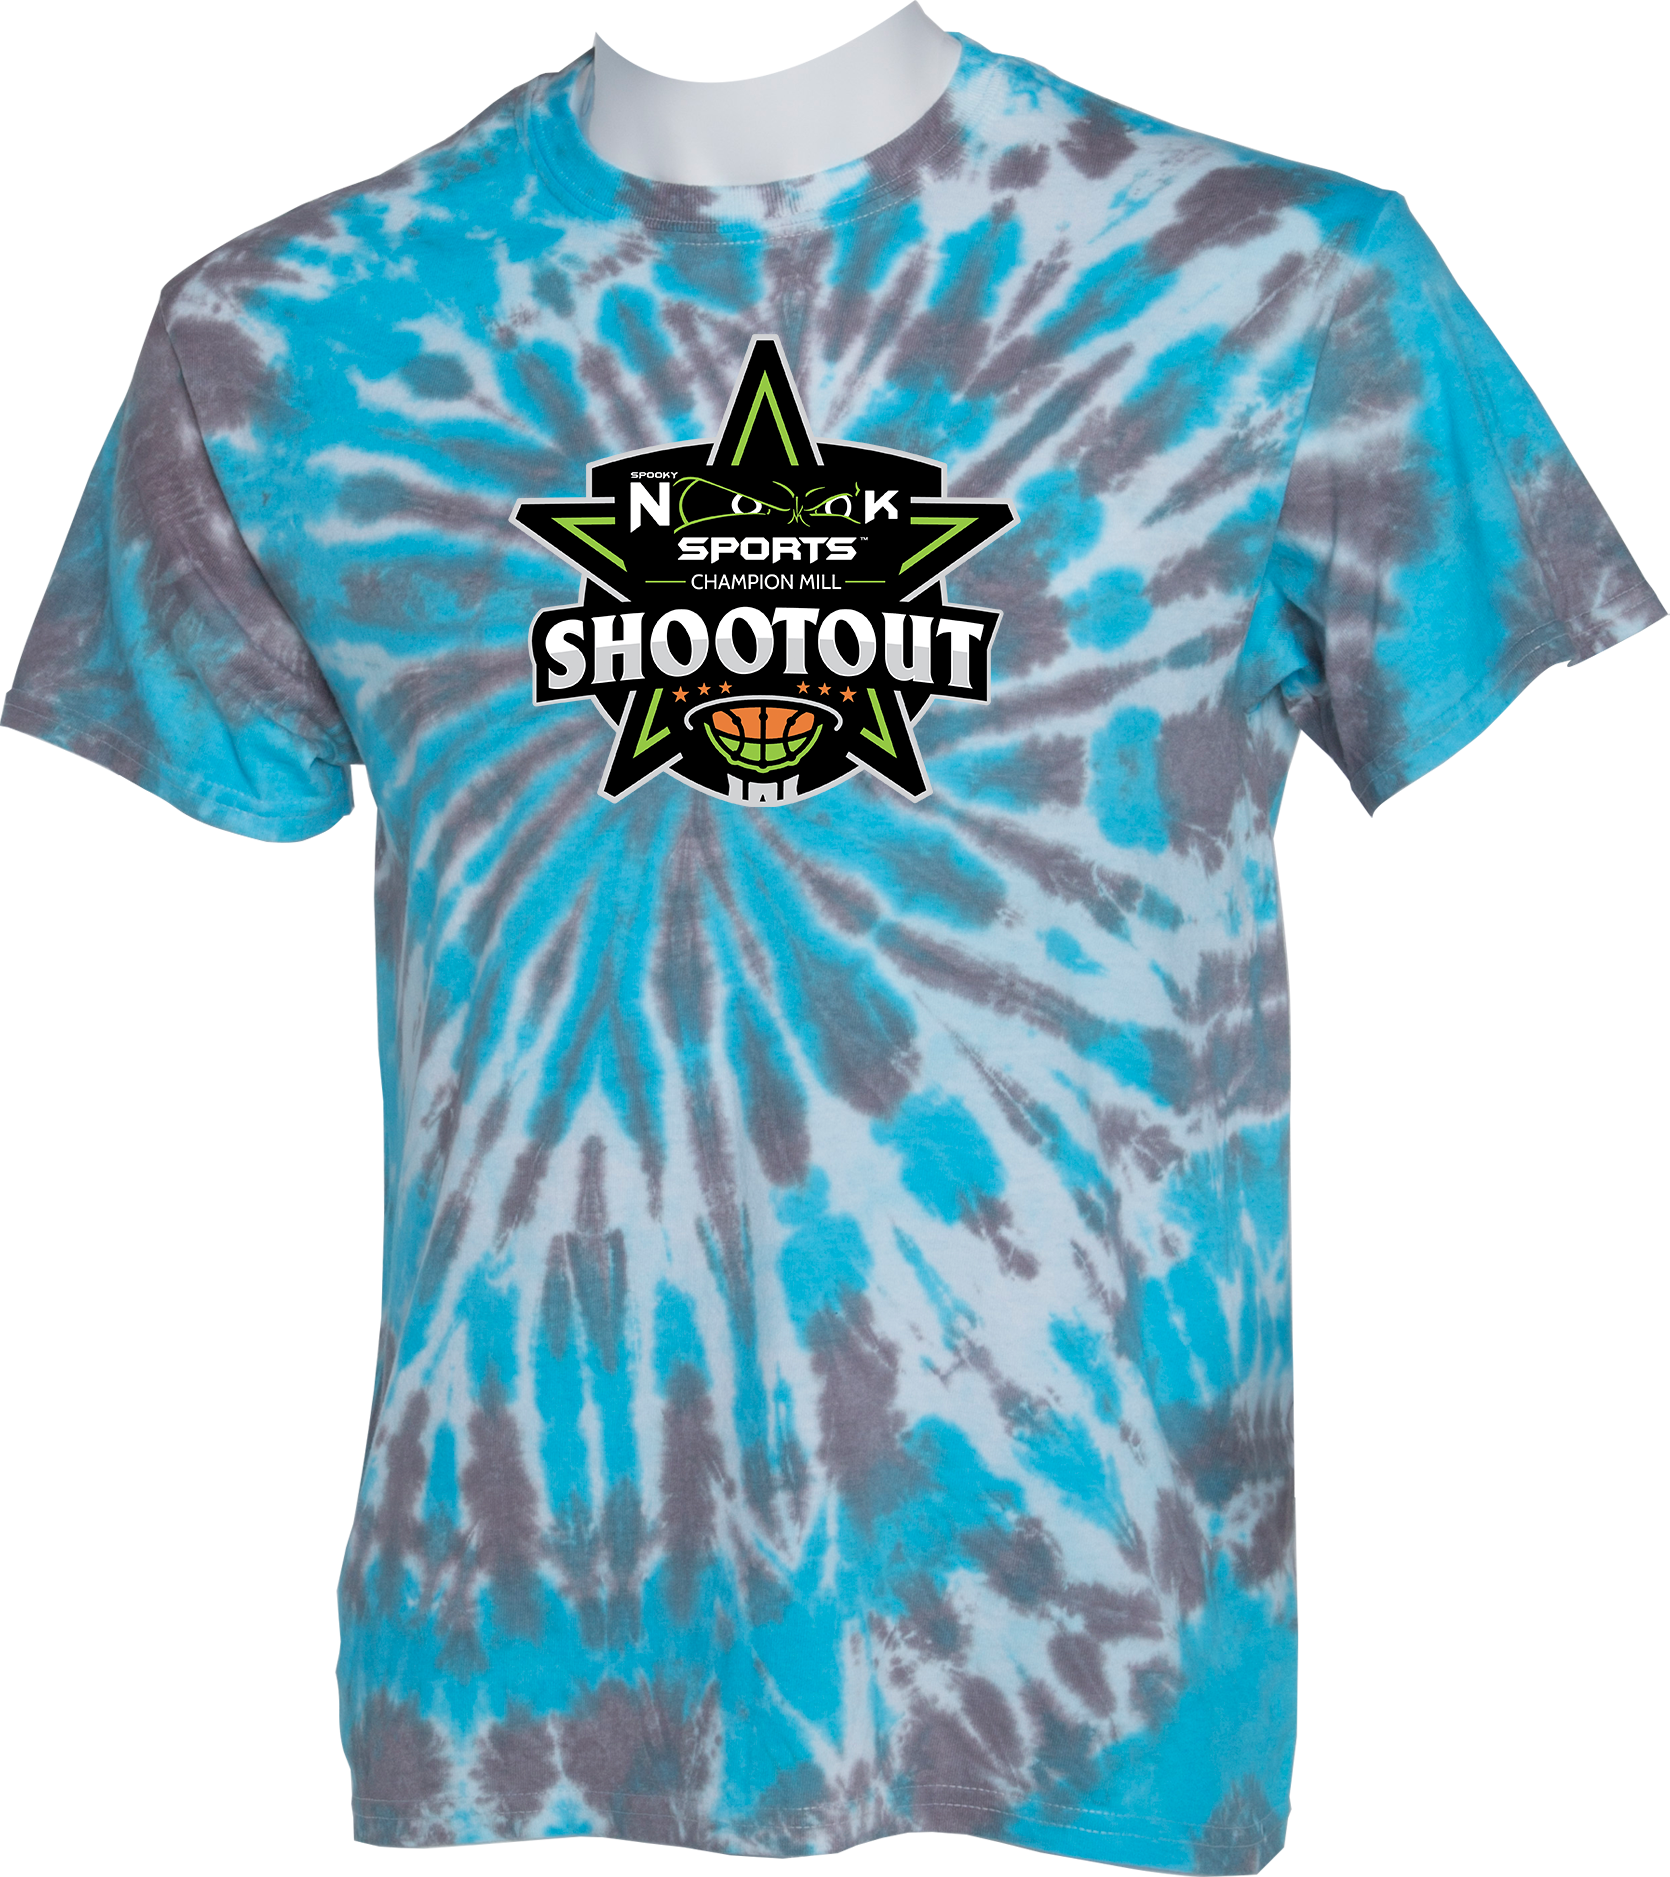 TIE-DYE SHORT SLEEVES - 2023 Spooky Nook Sports Champion Mill Shootout